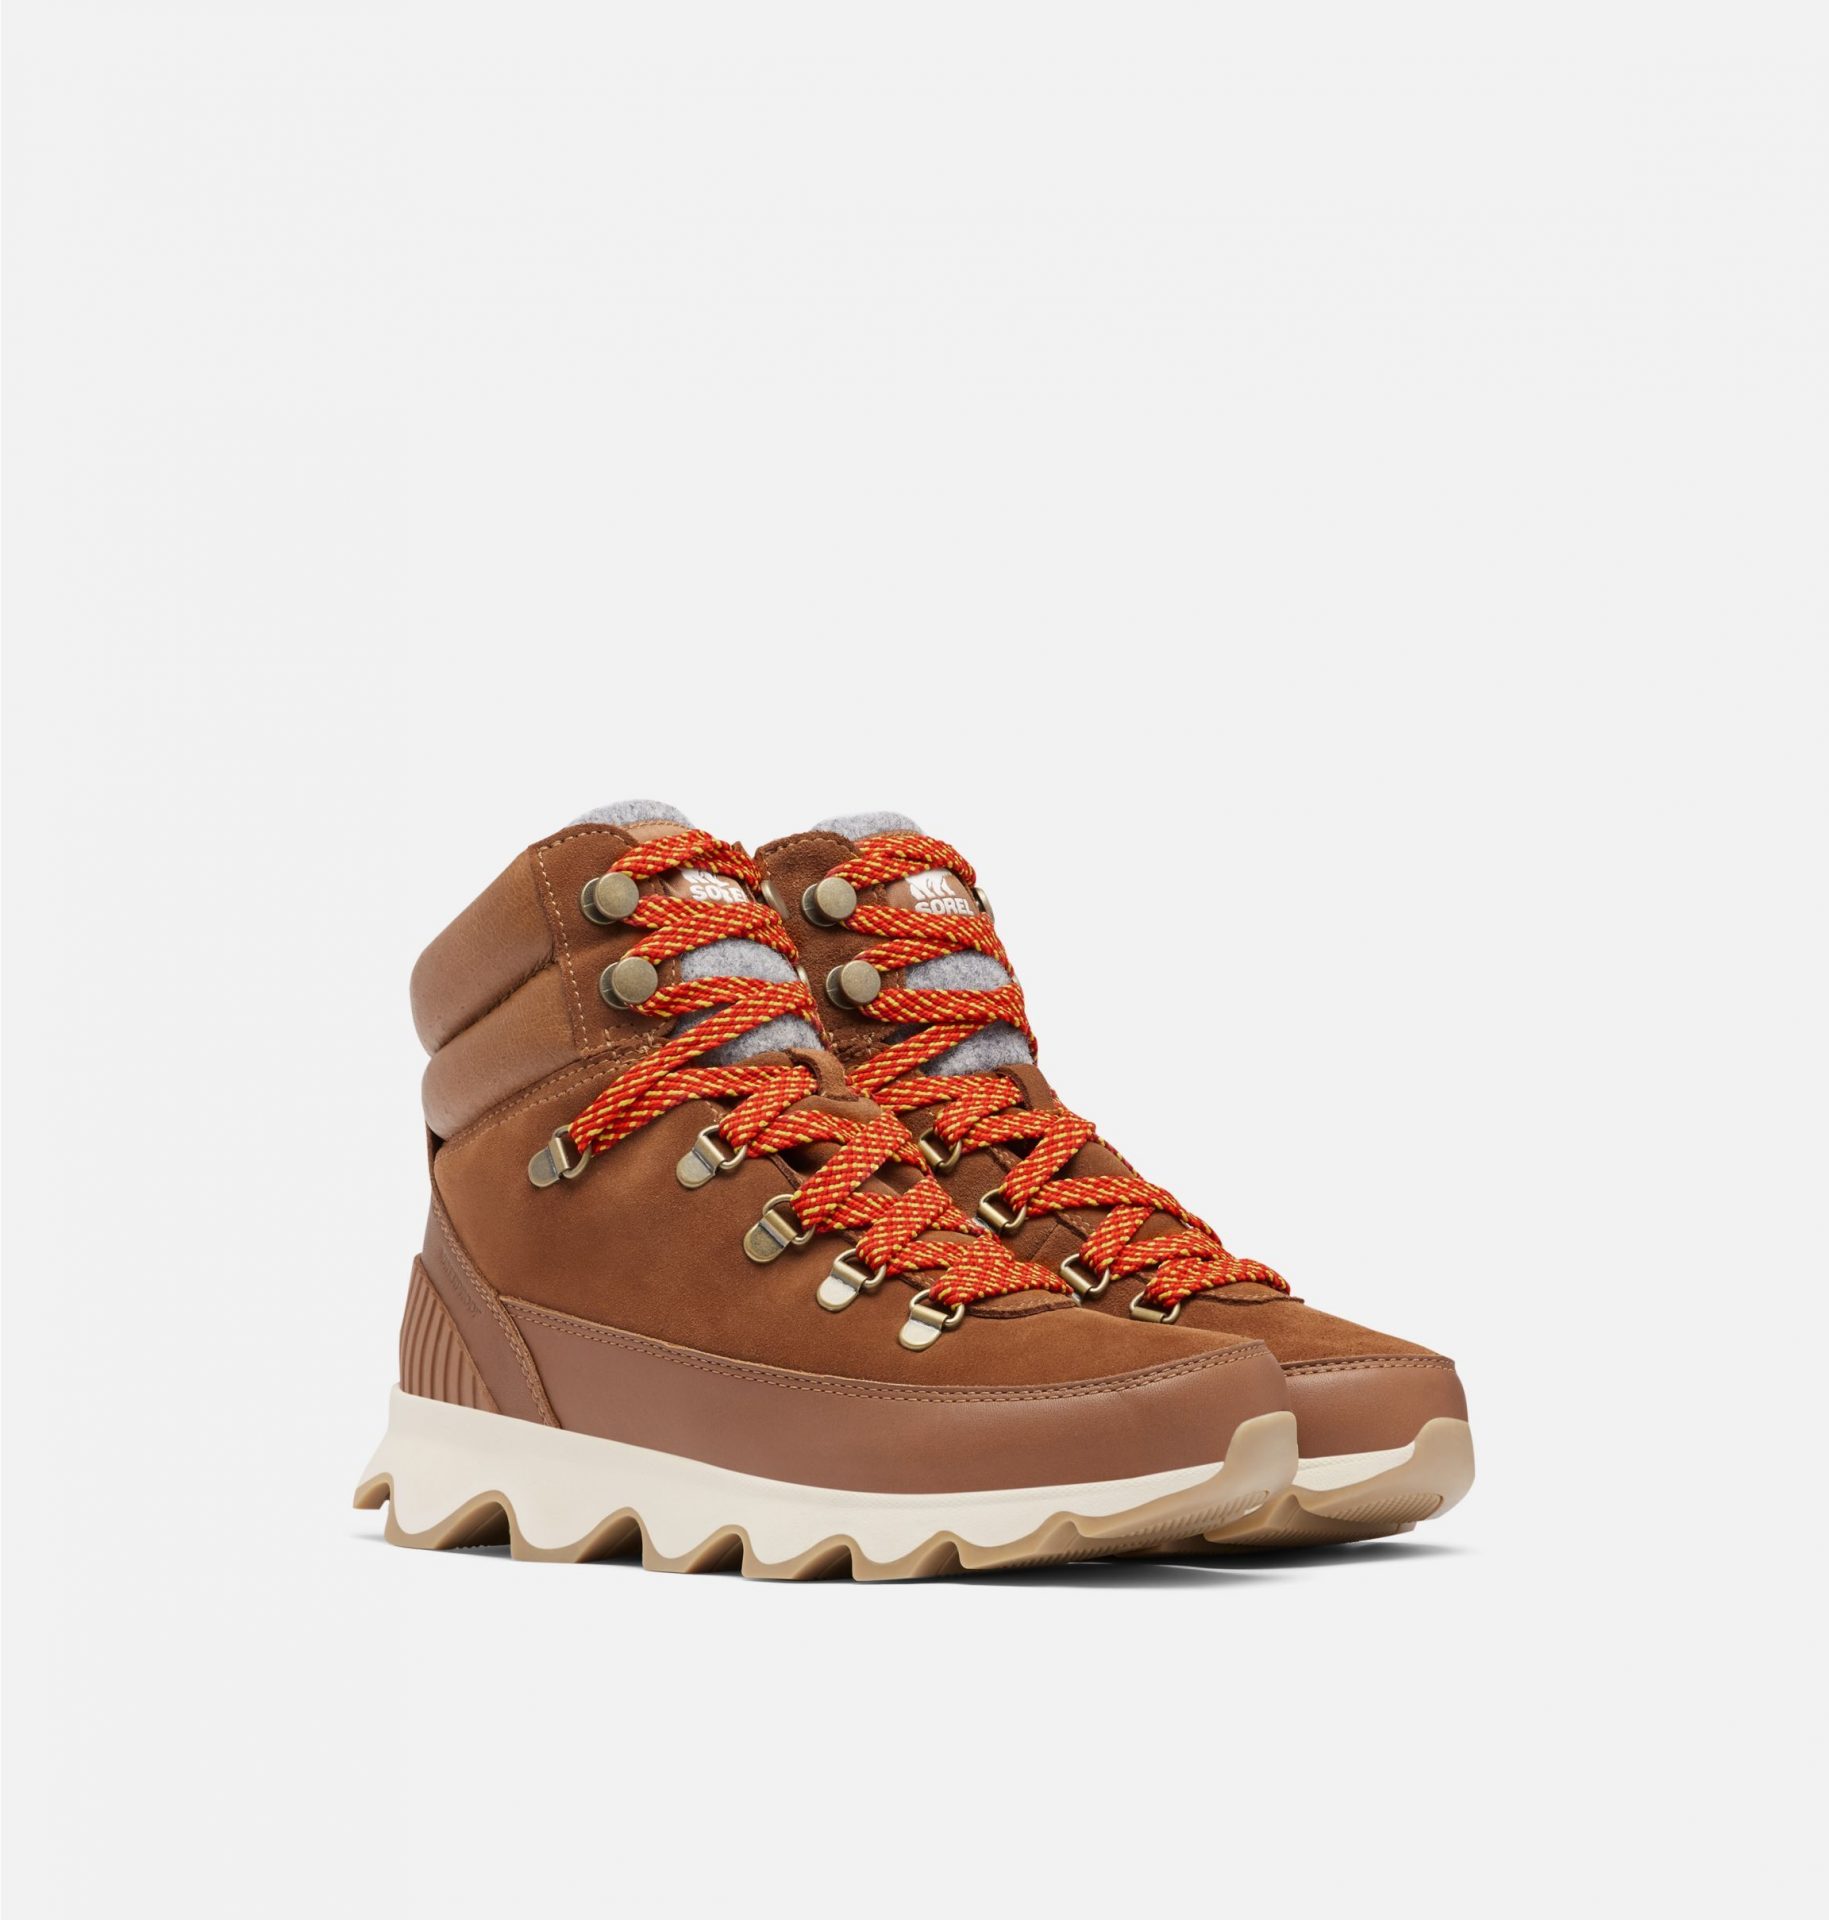 Buy > sorel women's walking boots > in stock